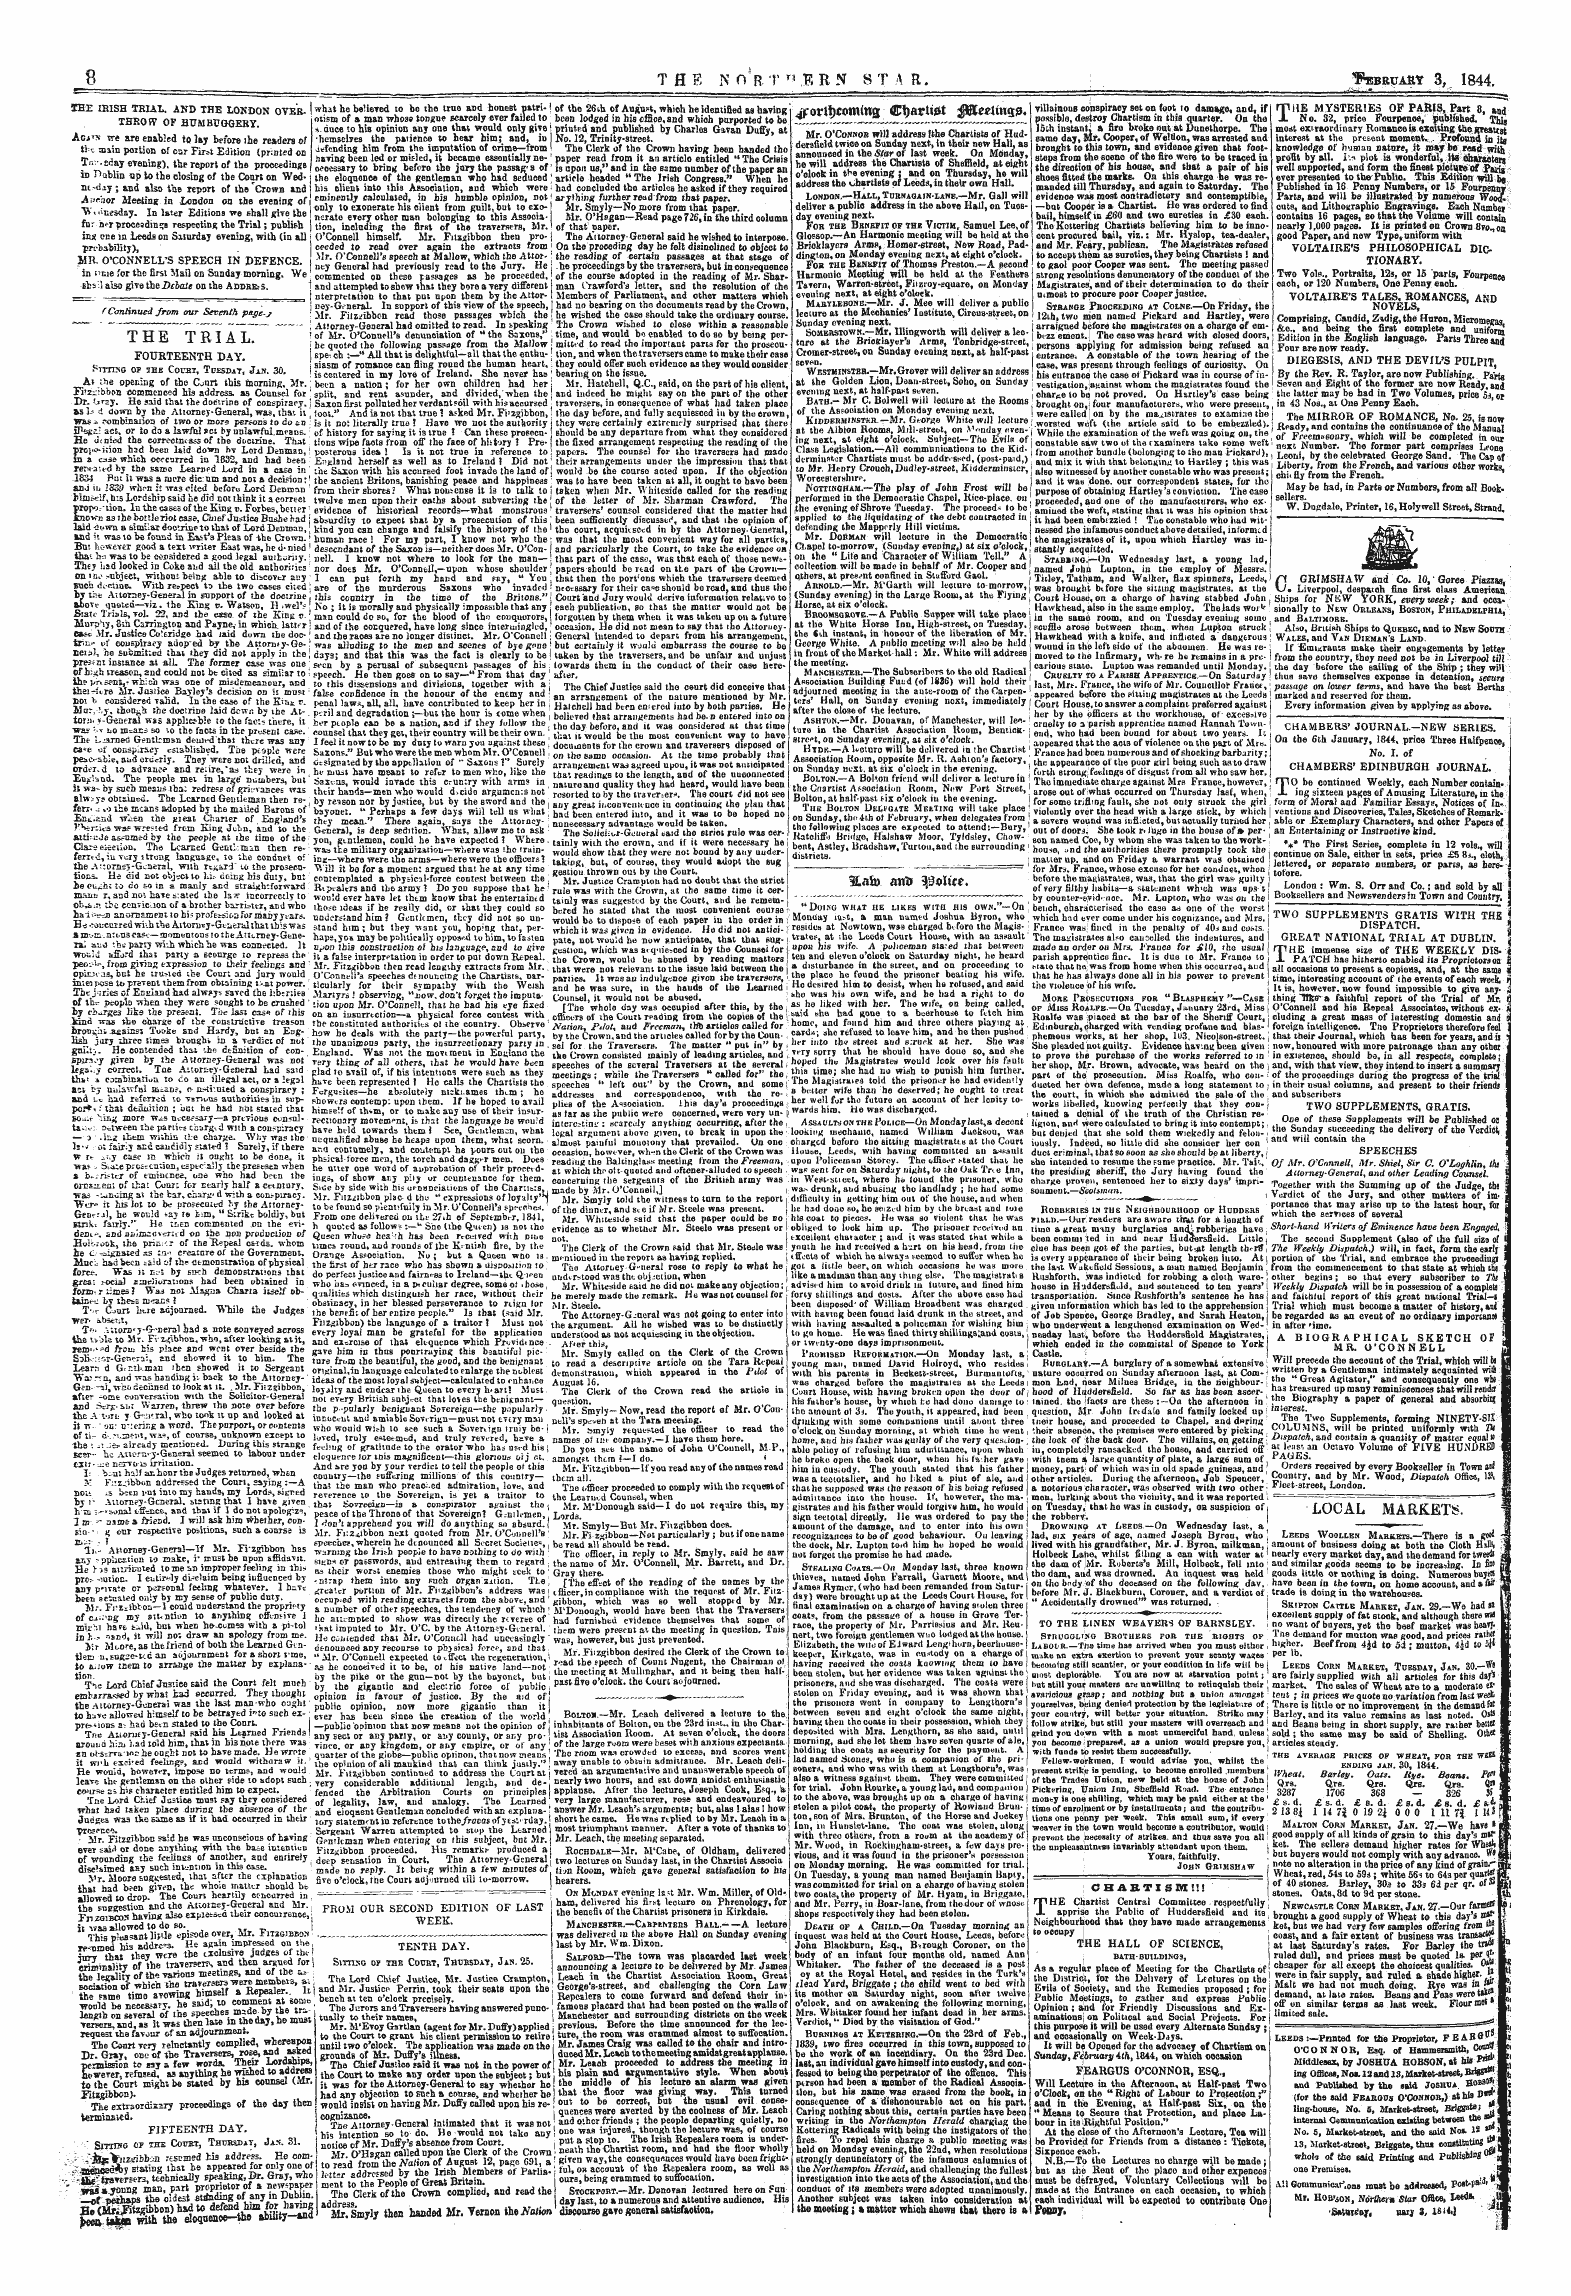 Northern Star (1837-1852): jS F Y, 1st edition - Leeds :—Printed For The Proprietor, Pb Ab&R. O'Connor, Esq. Of Hammersmith, C O°™ _ ._ . » •" •. Twfflll